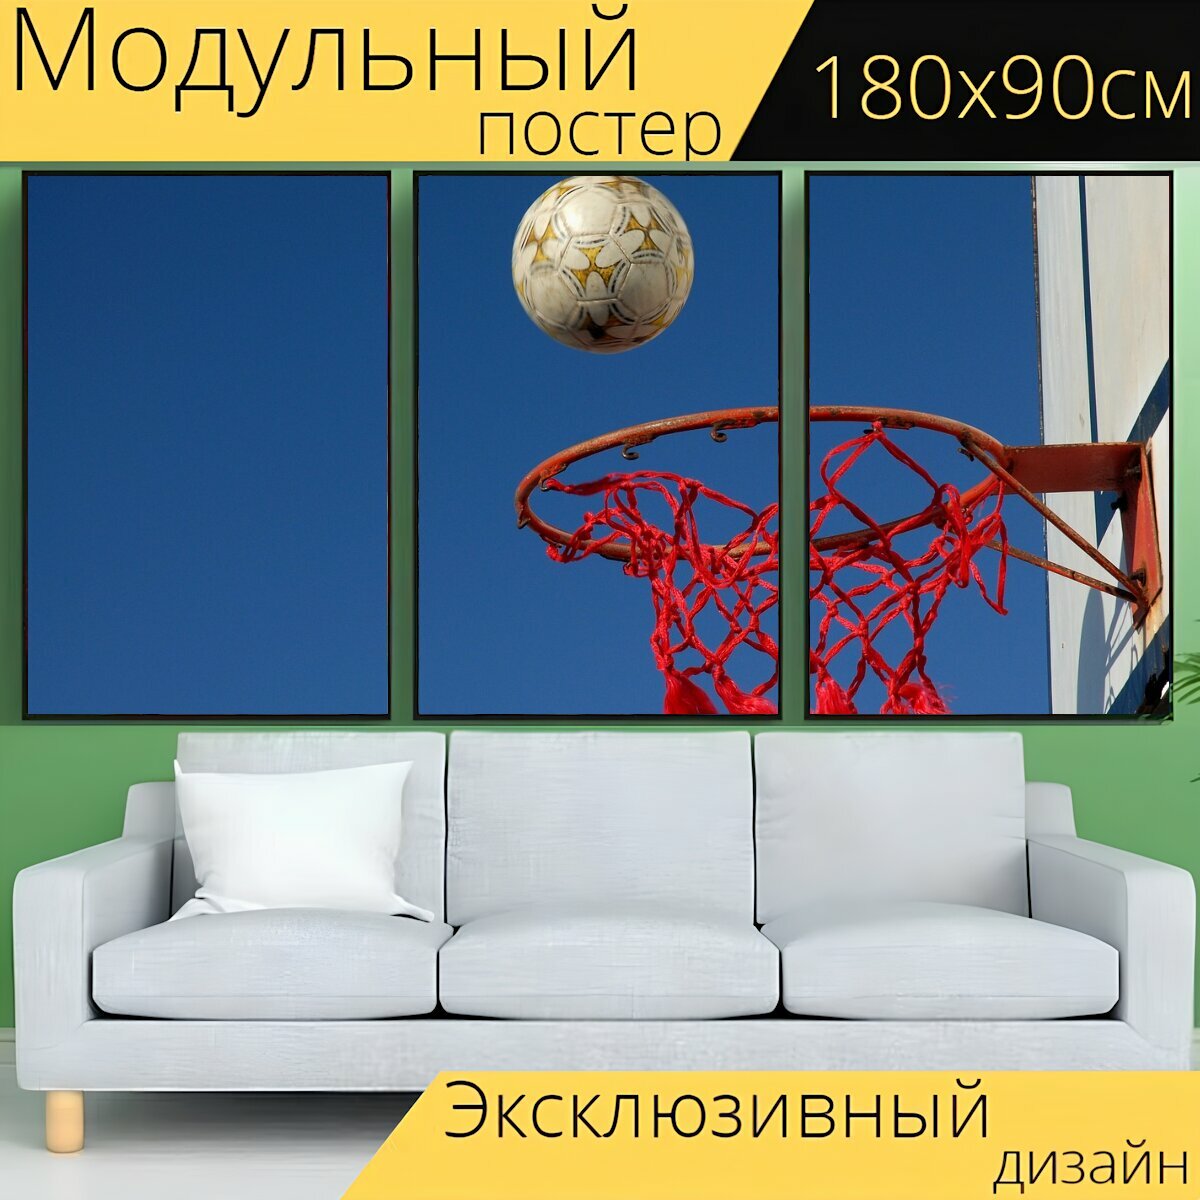 Модульный постер "Баскетбол, спорт, корзина" 180 x 90 см. для интерьера